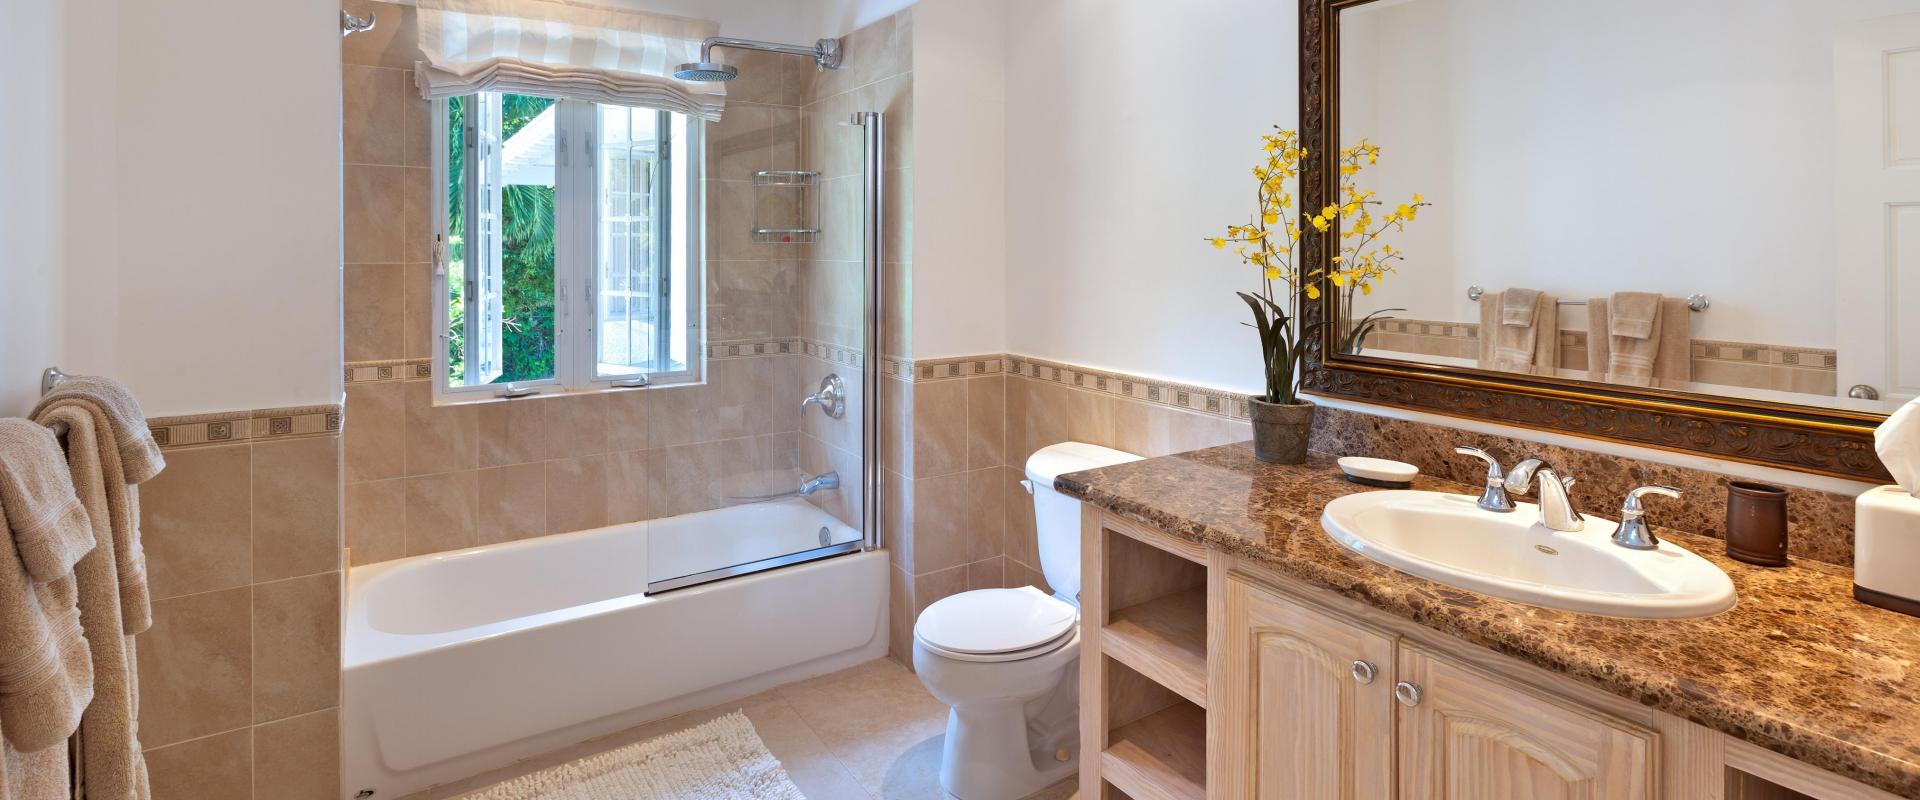 Sandy Lane Barbados Holiday Rental Rose of Sharon Master Bathroom with Tub and Shower